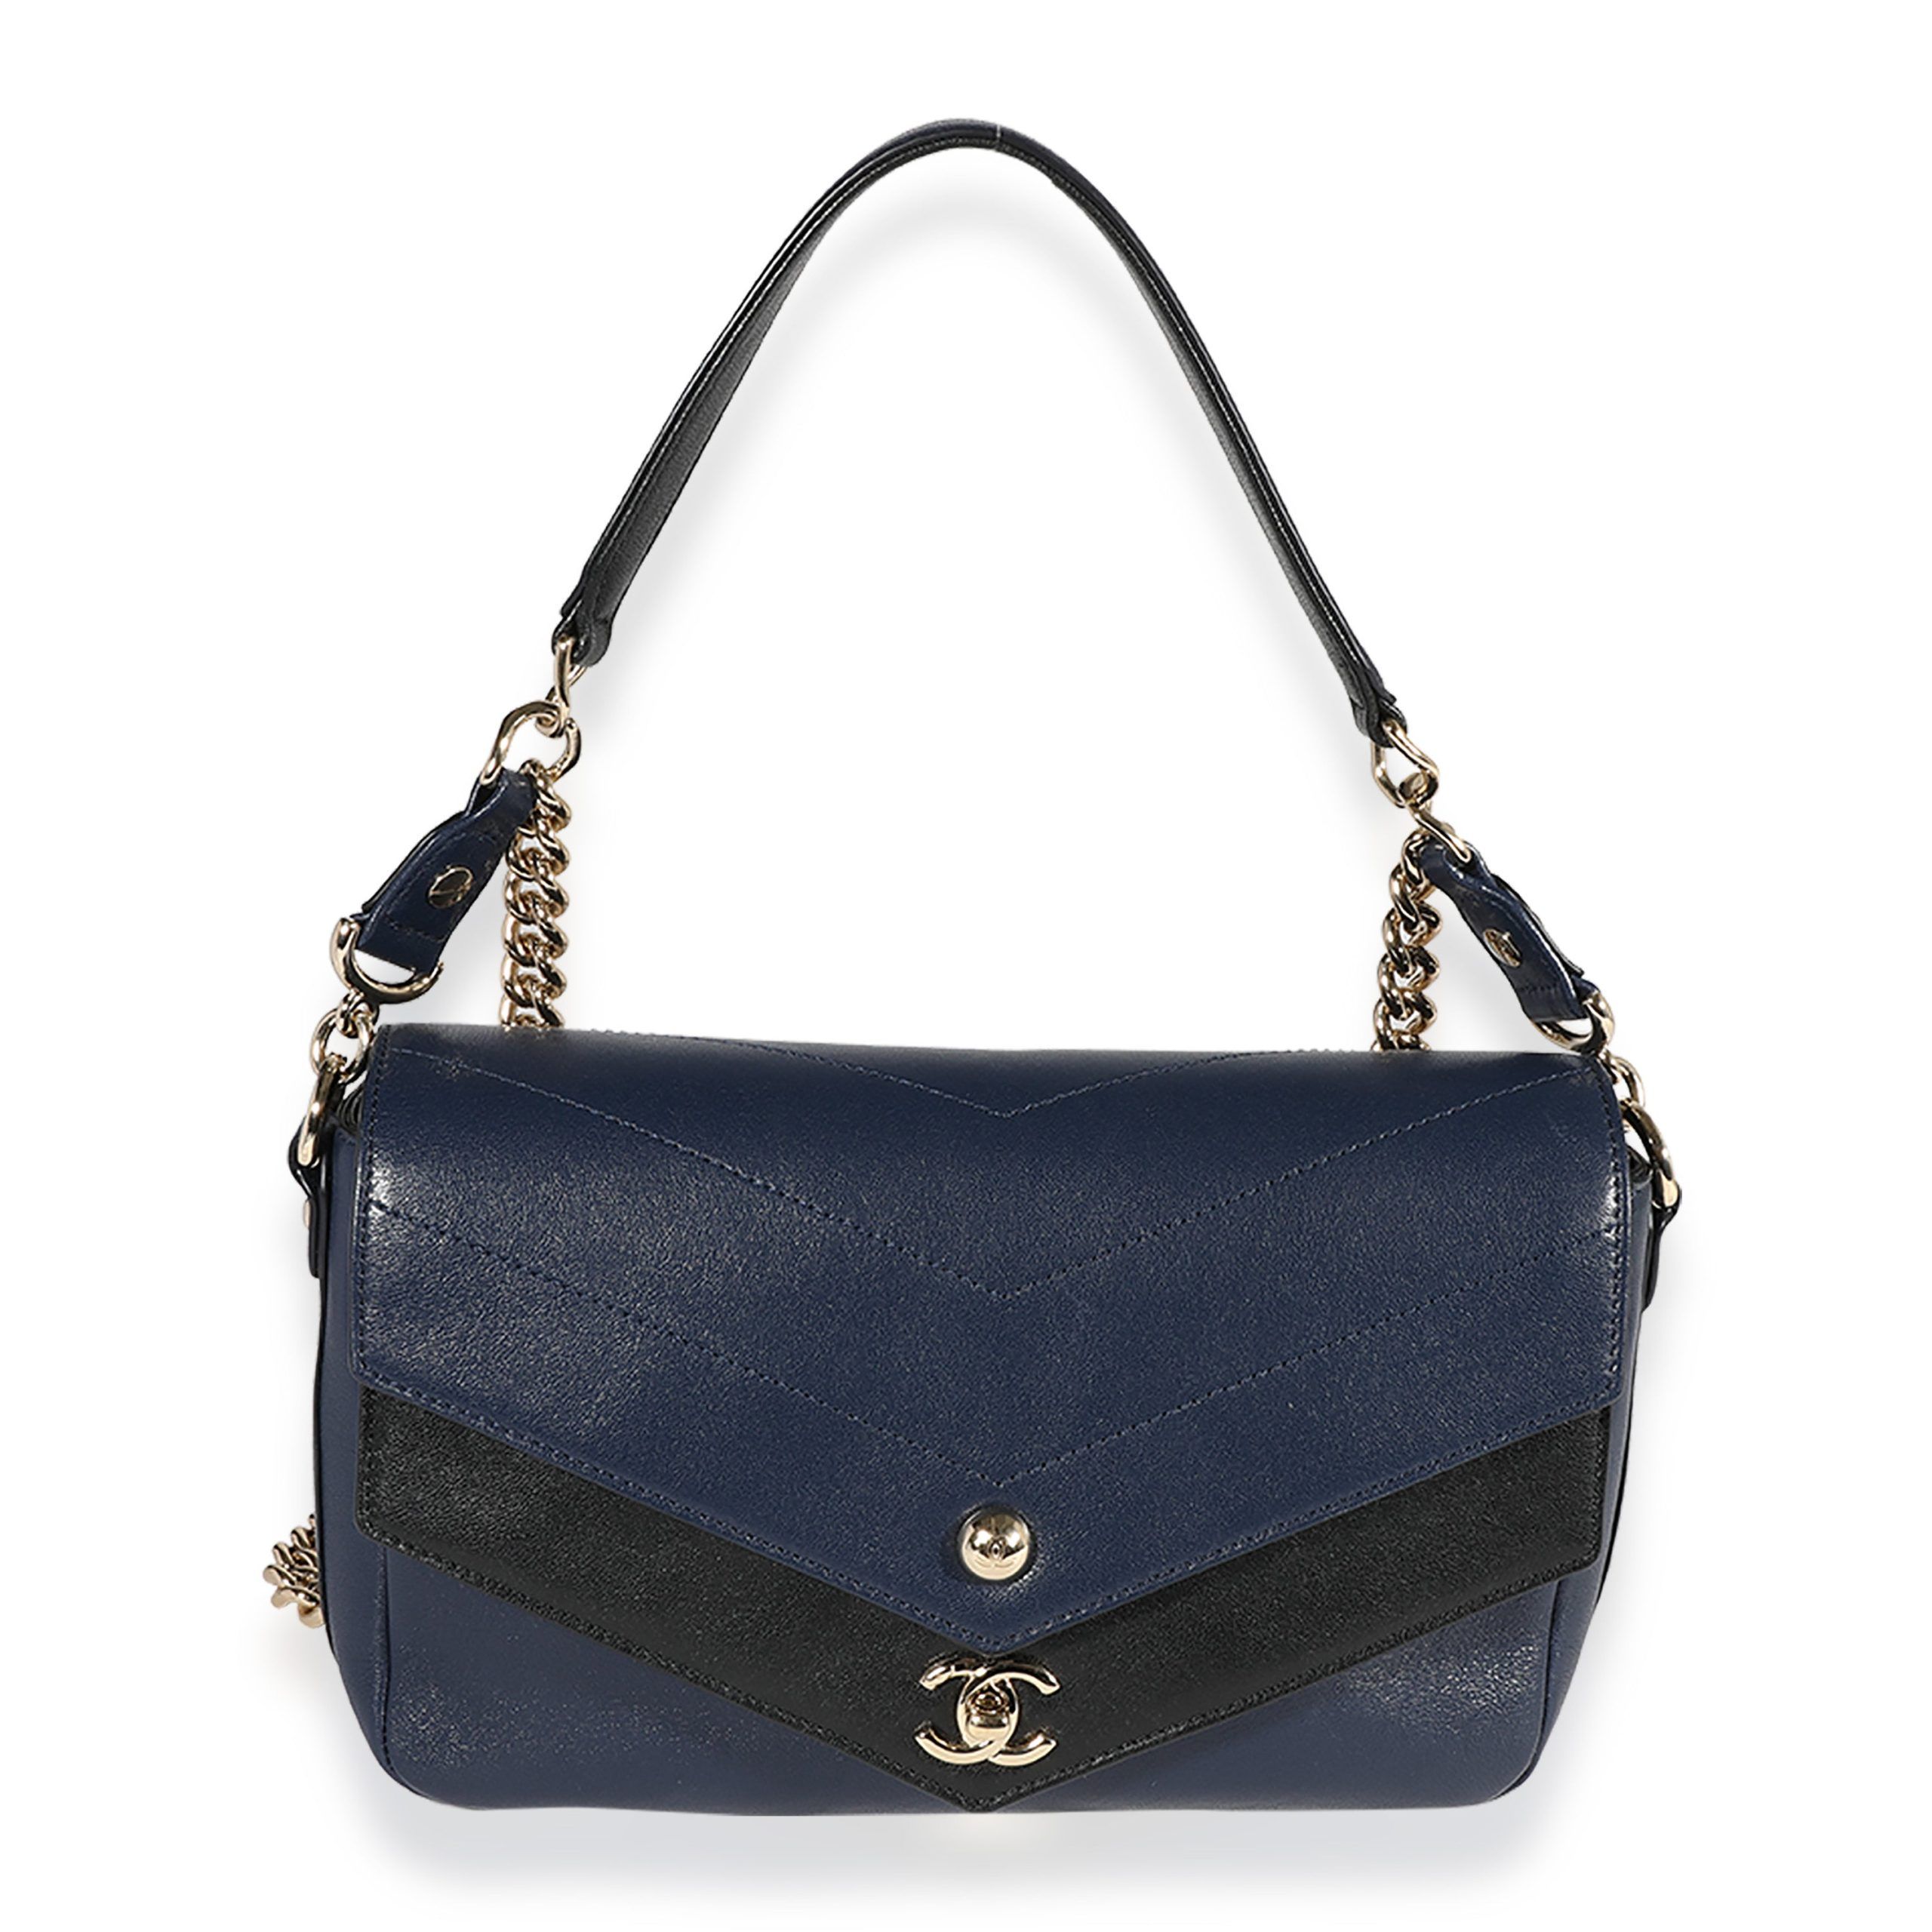 Chanel Chanel Blue & Black Chevron Calfskin Double Envelope Flap Bag Size ONE SIZE - 1 Preview